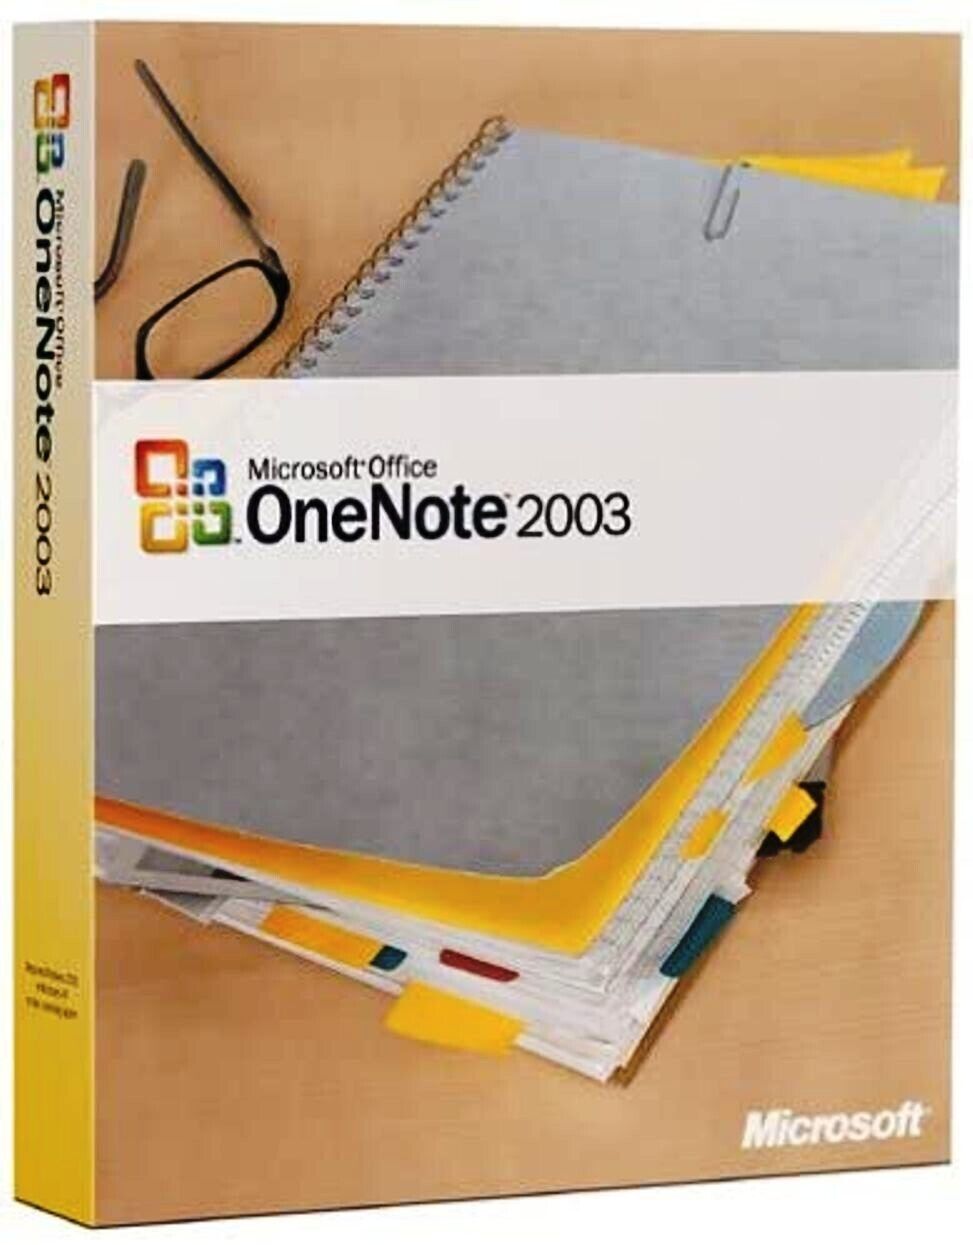 Microsoft Office OneNote 2003 Full Version CD & Product Key